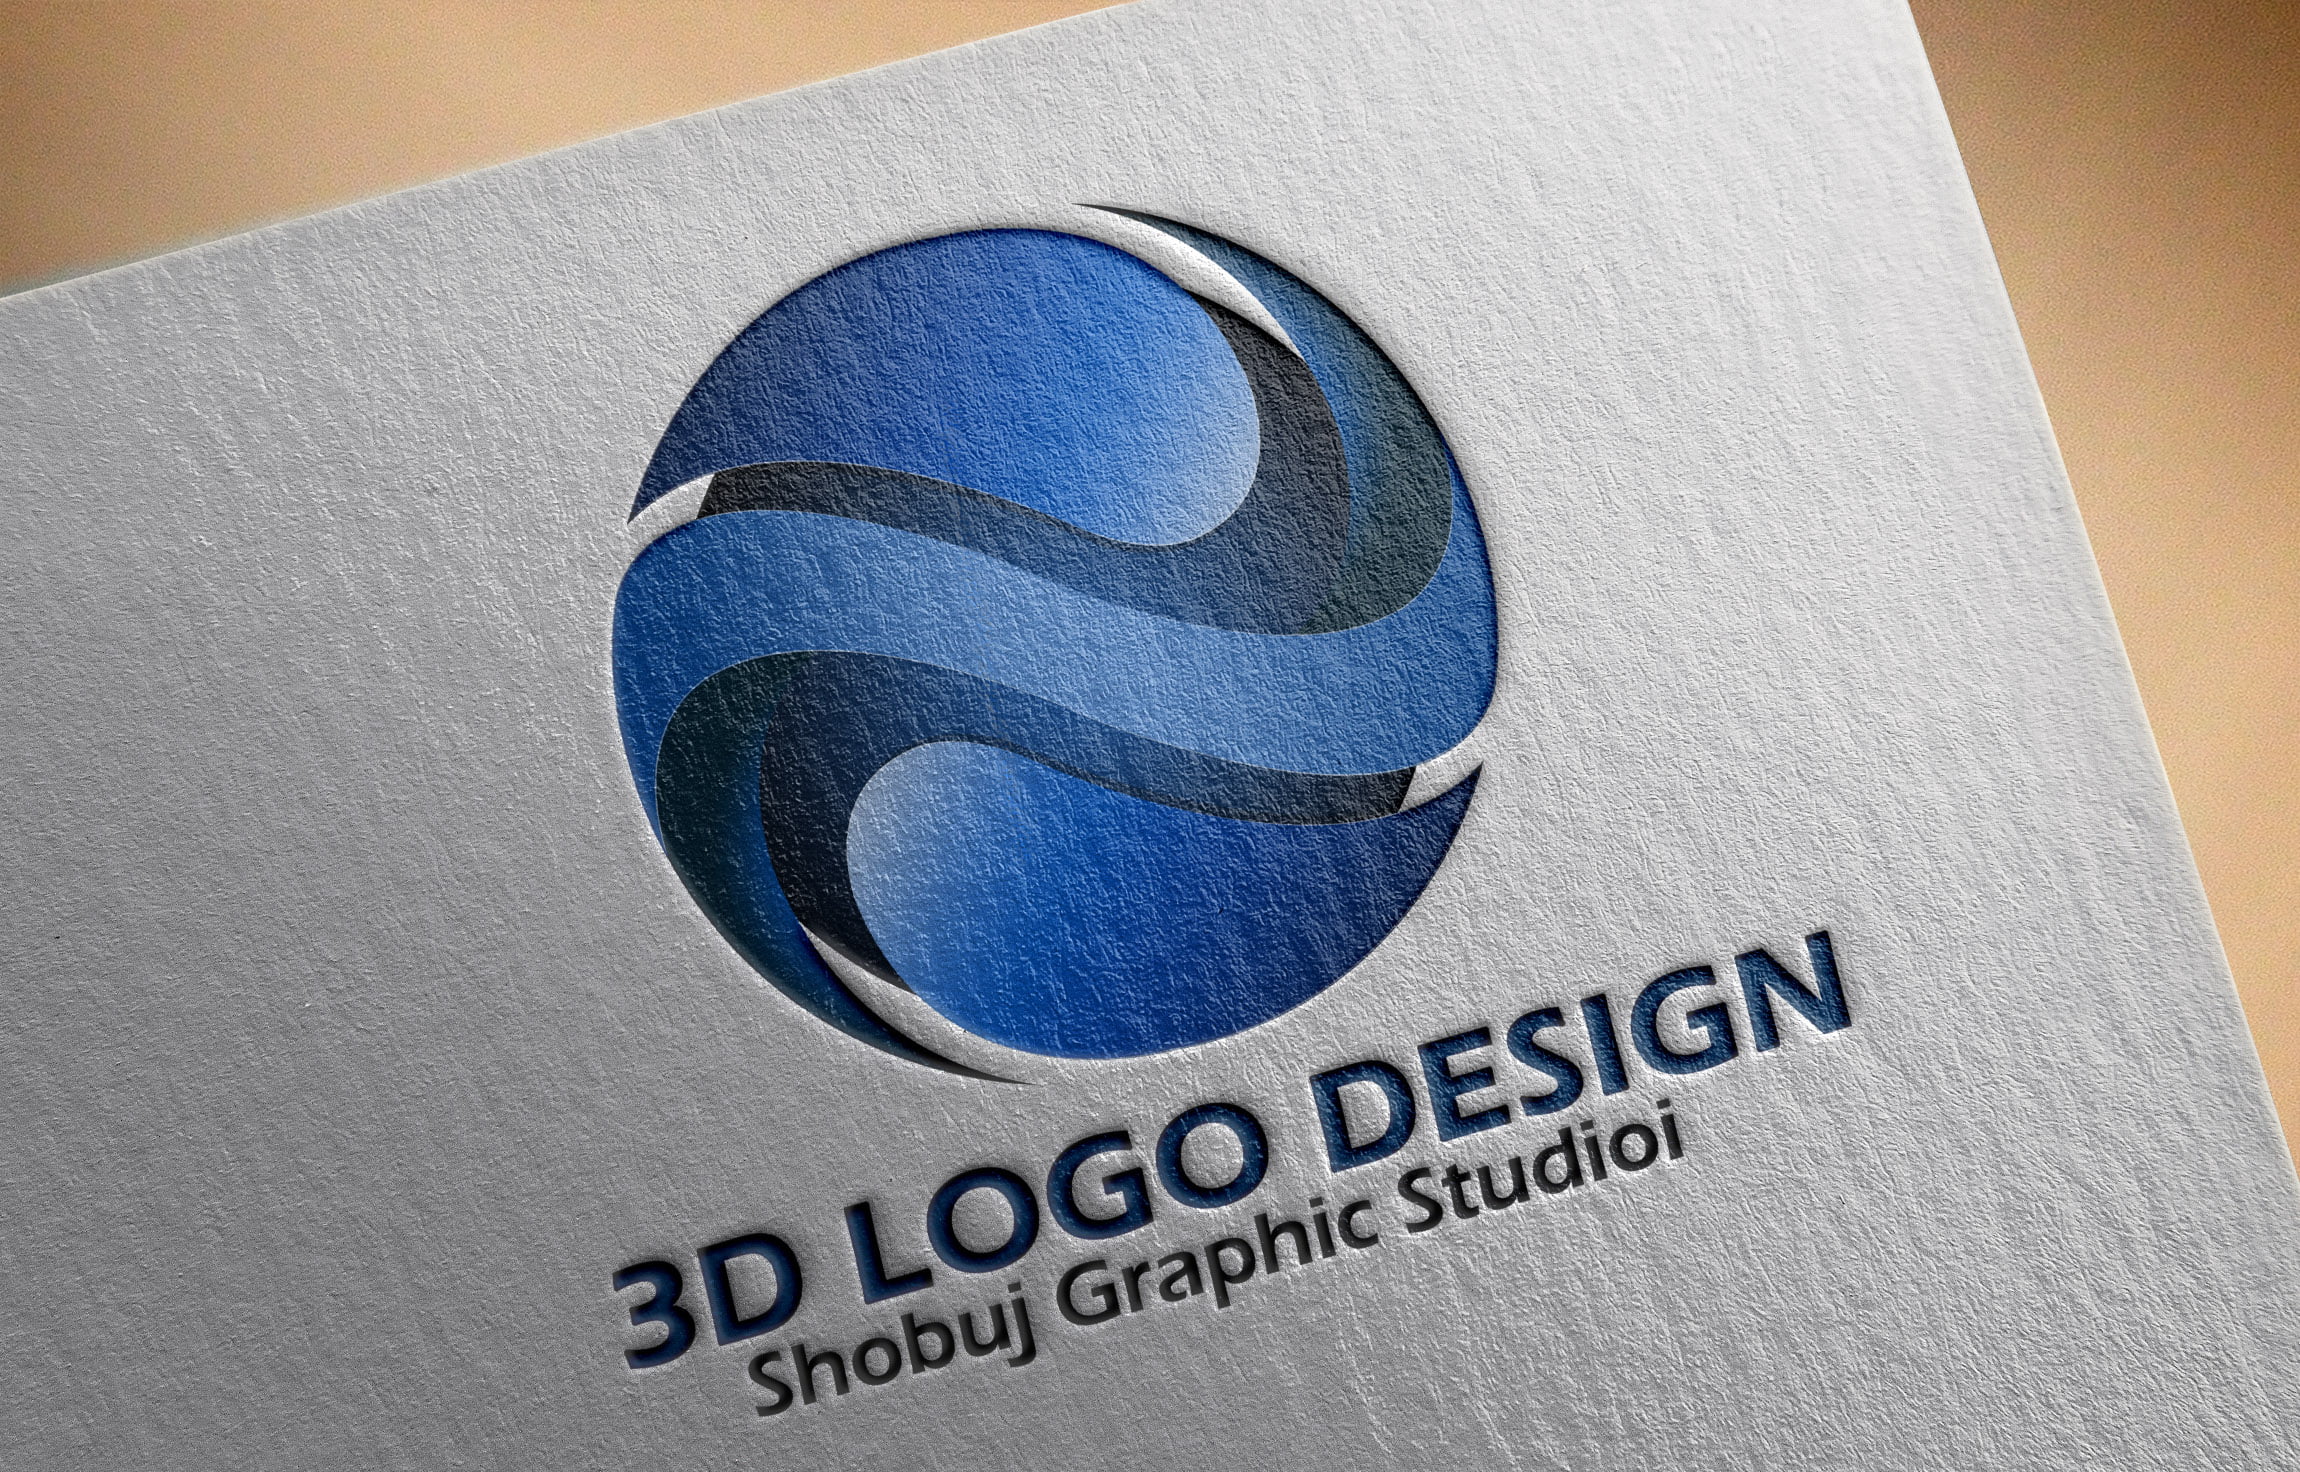 logo designer free online